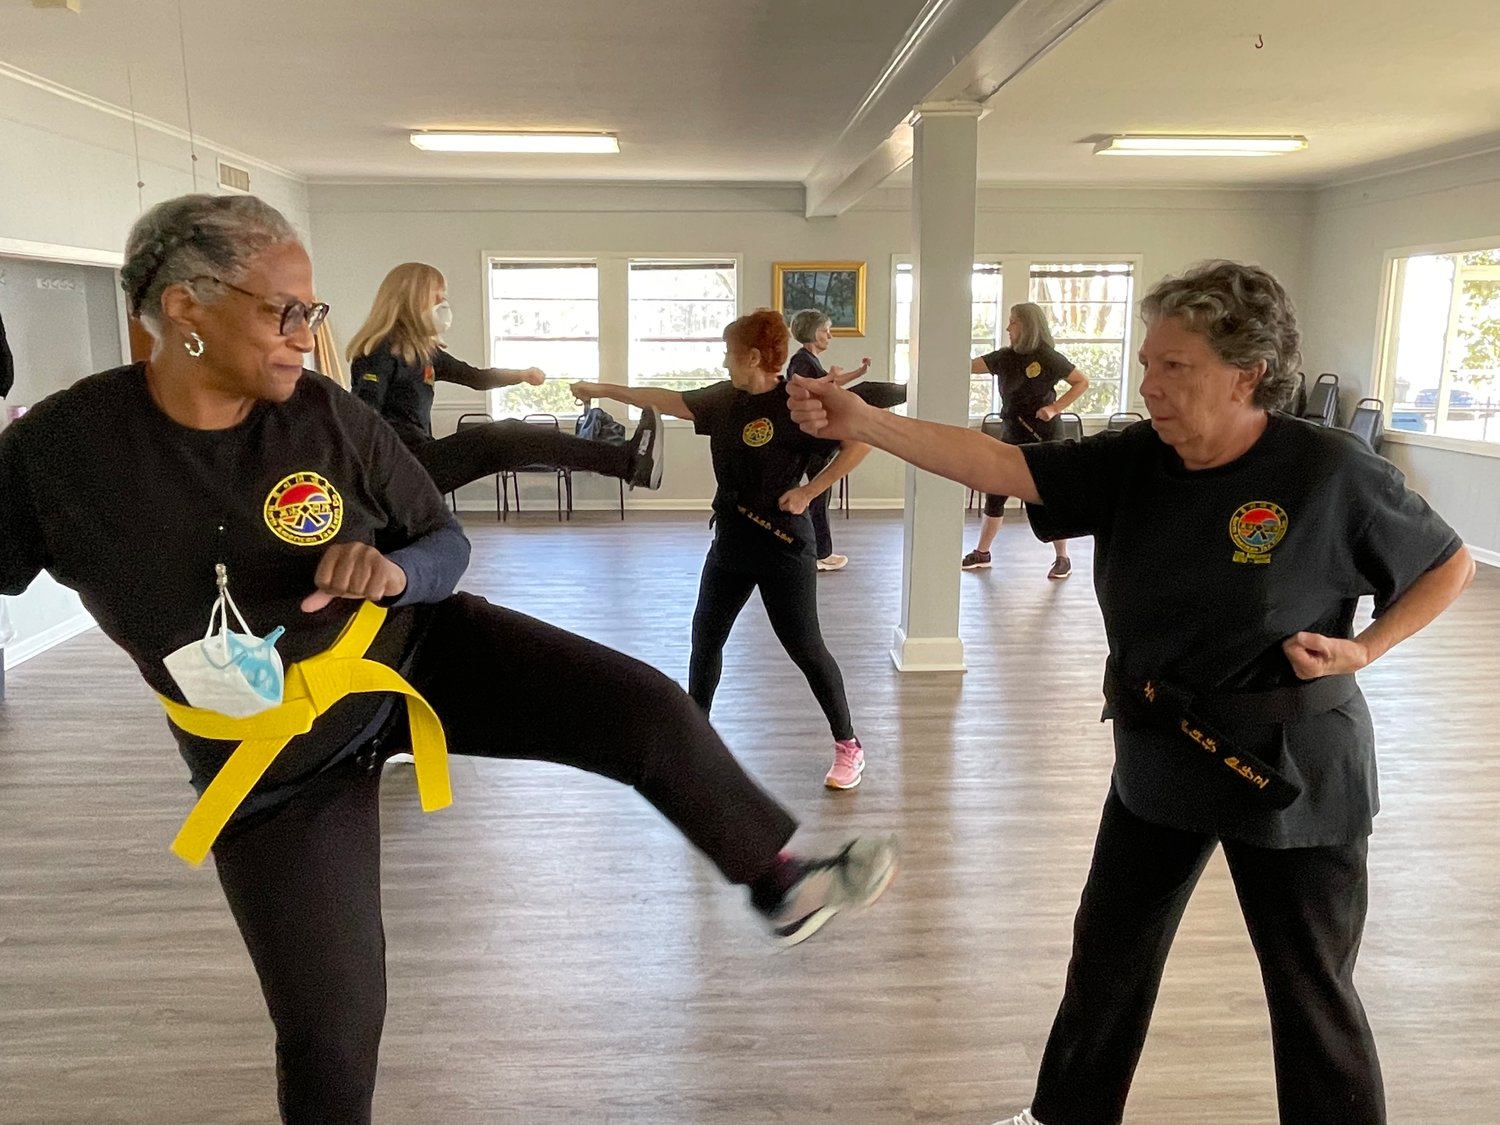 Yellow belt Paulette Grim practices fighting techniques with her classmate Diane Malouse, a black belt.